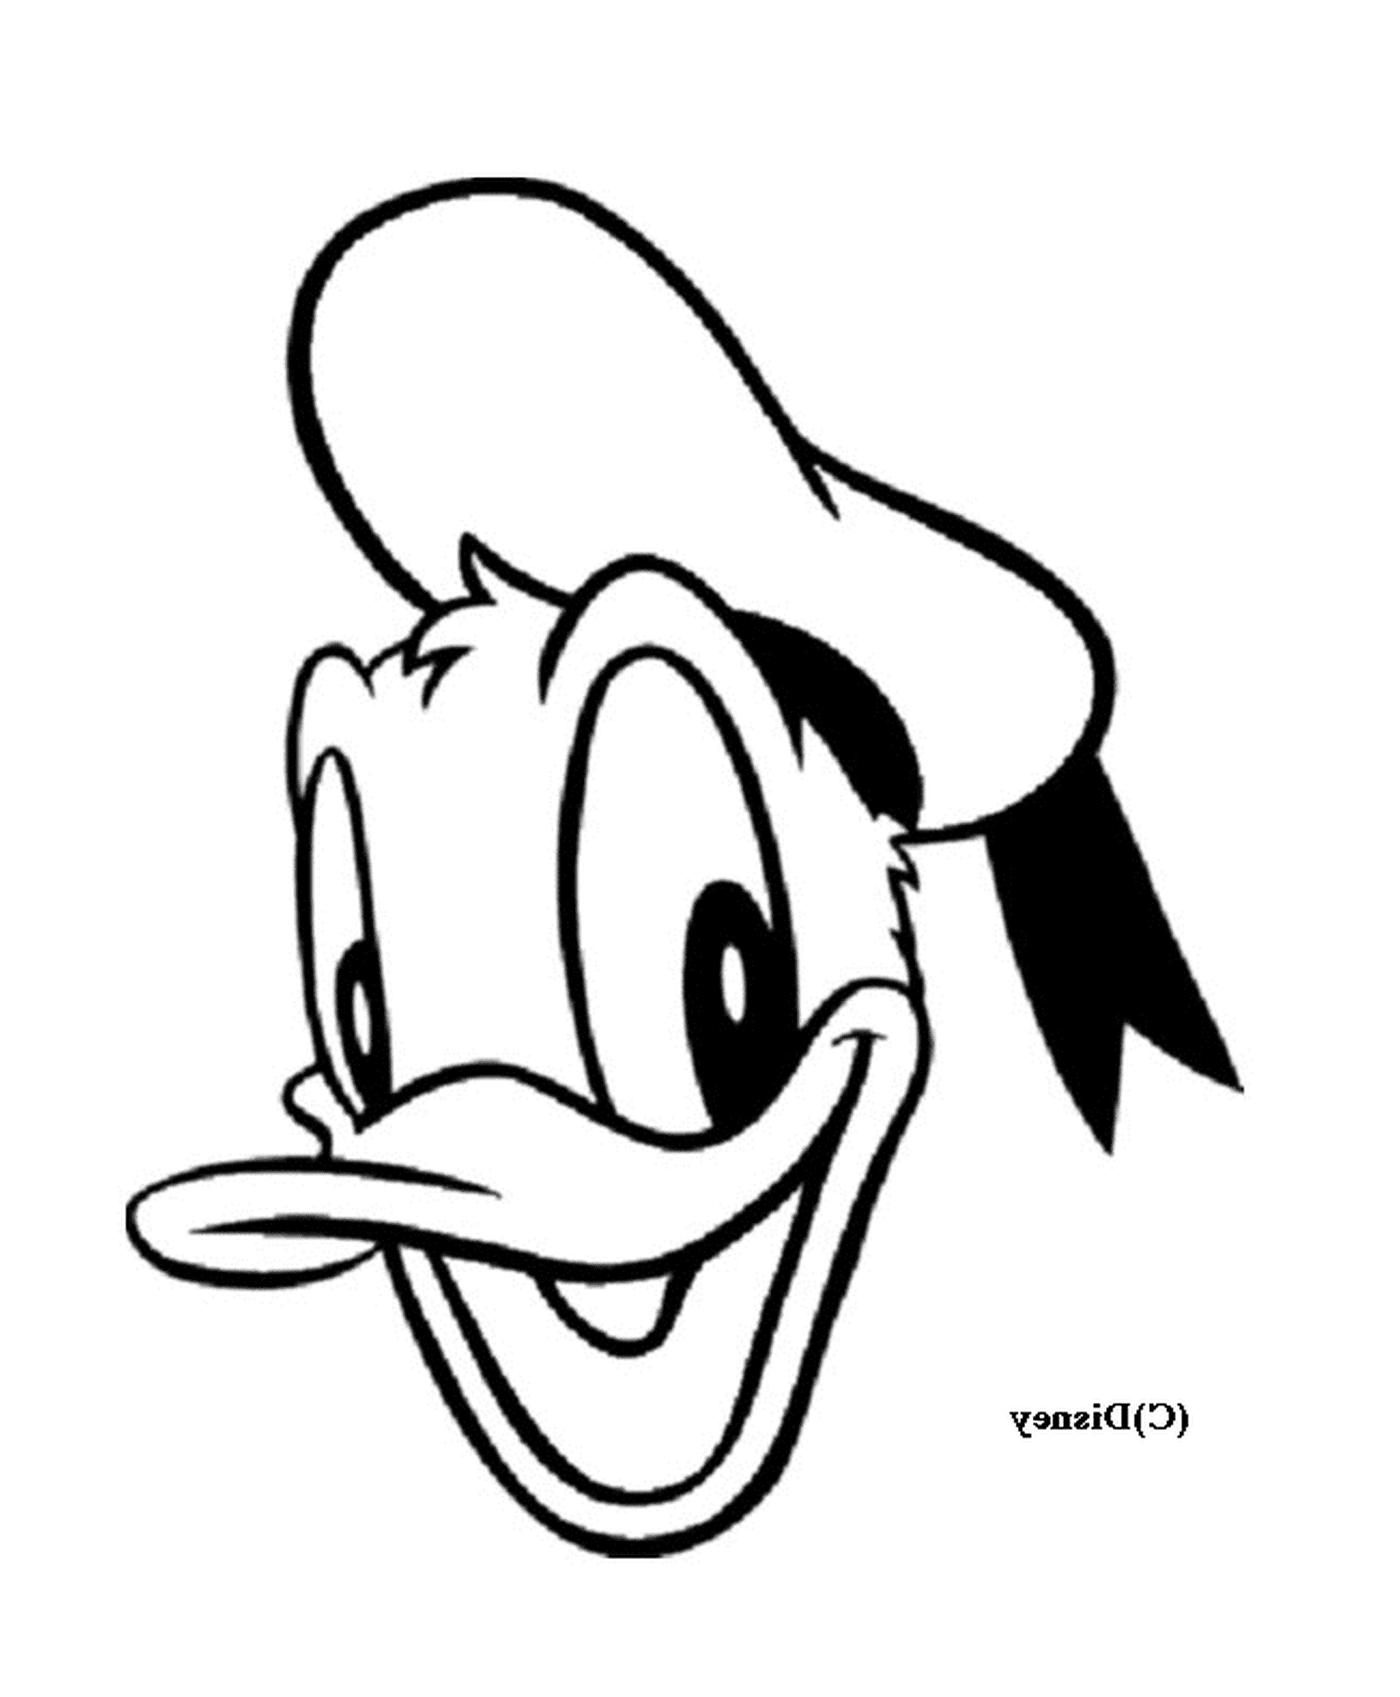  Donalds erkennbarer Kopf 